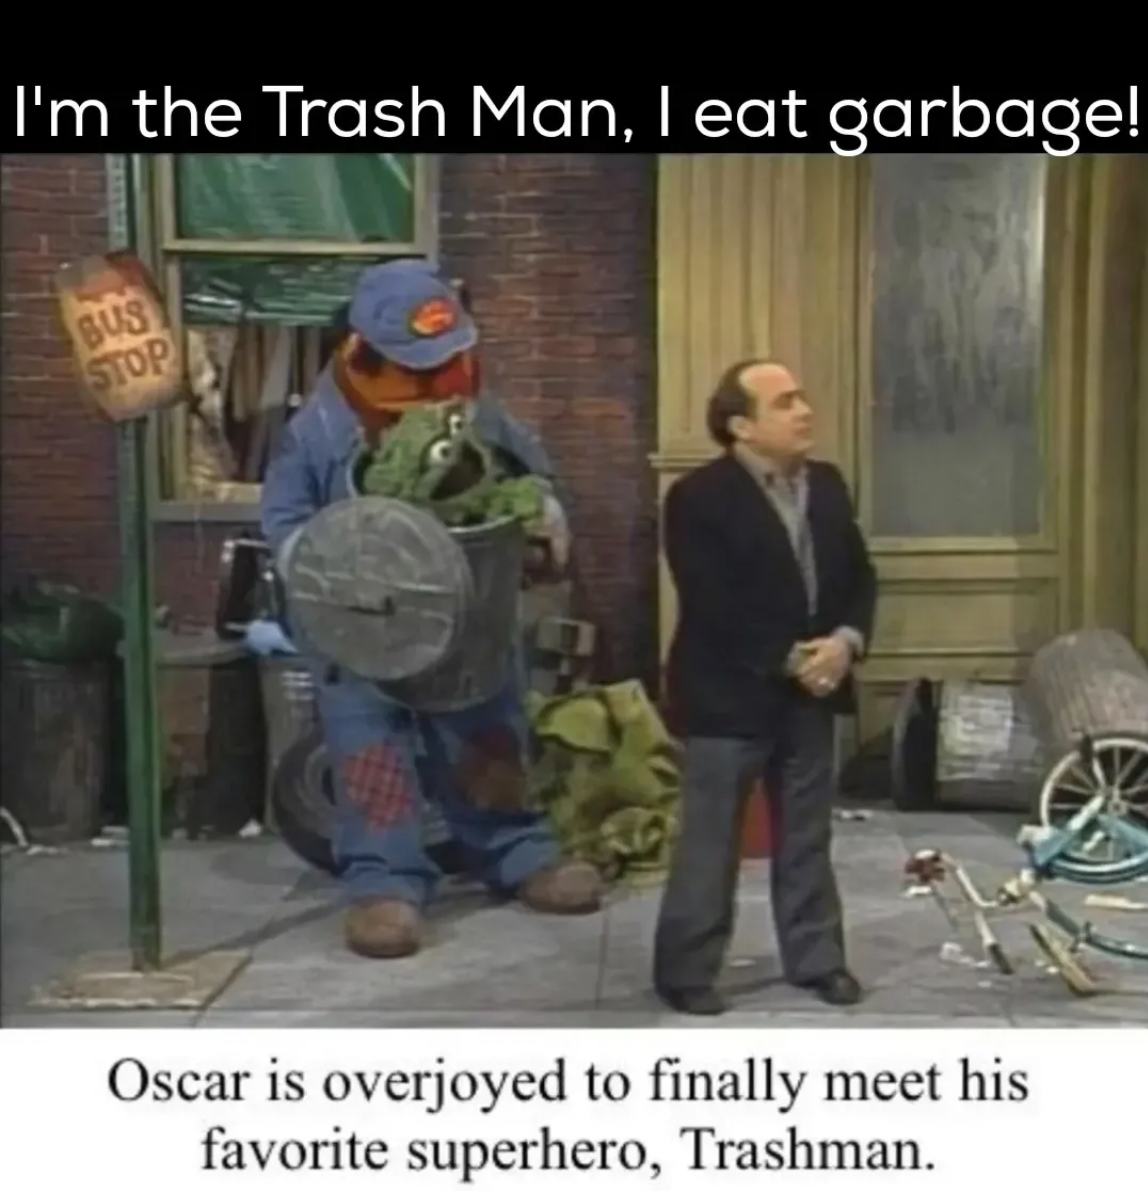 It's Always Sunny in Philadelphia memes - human behavior - I'm the Trash Man, I eat garbage! Bus Stop Oscar is overjoyed to finally meet his favorite superhero, Trashman.